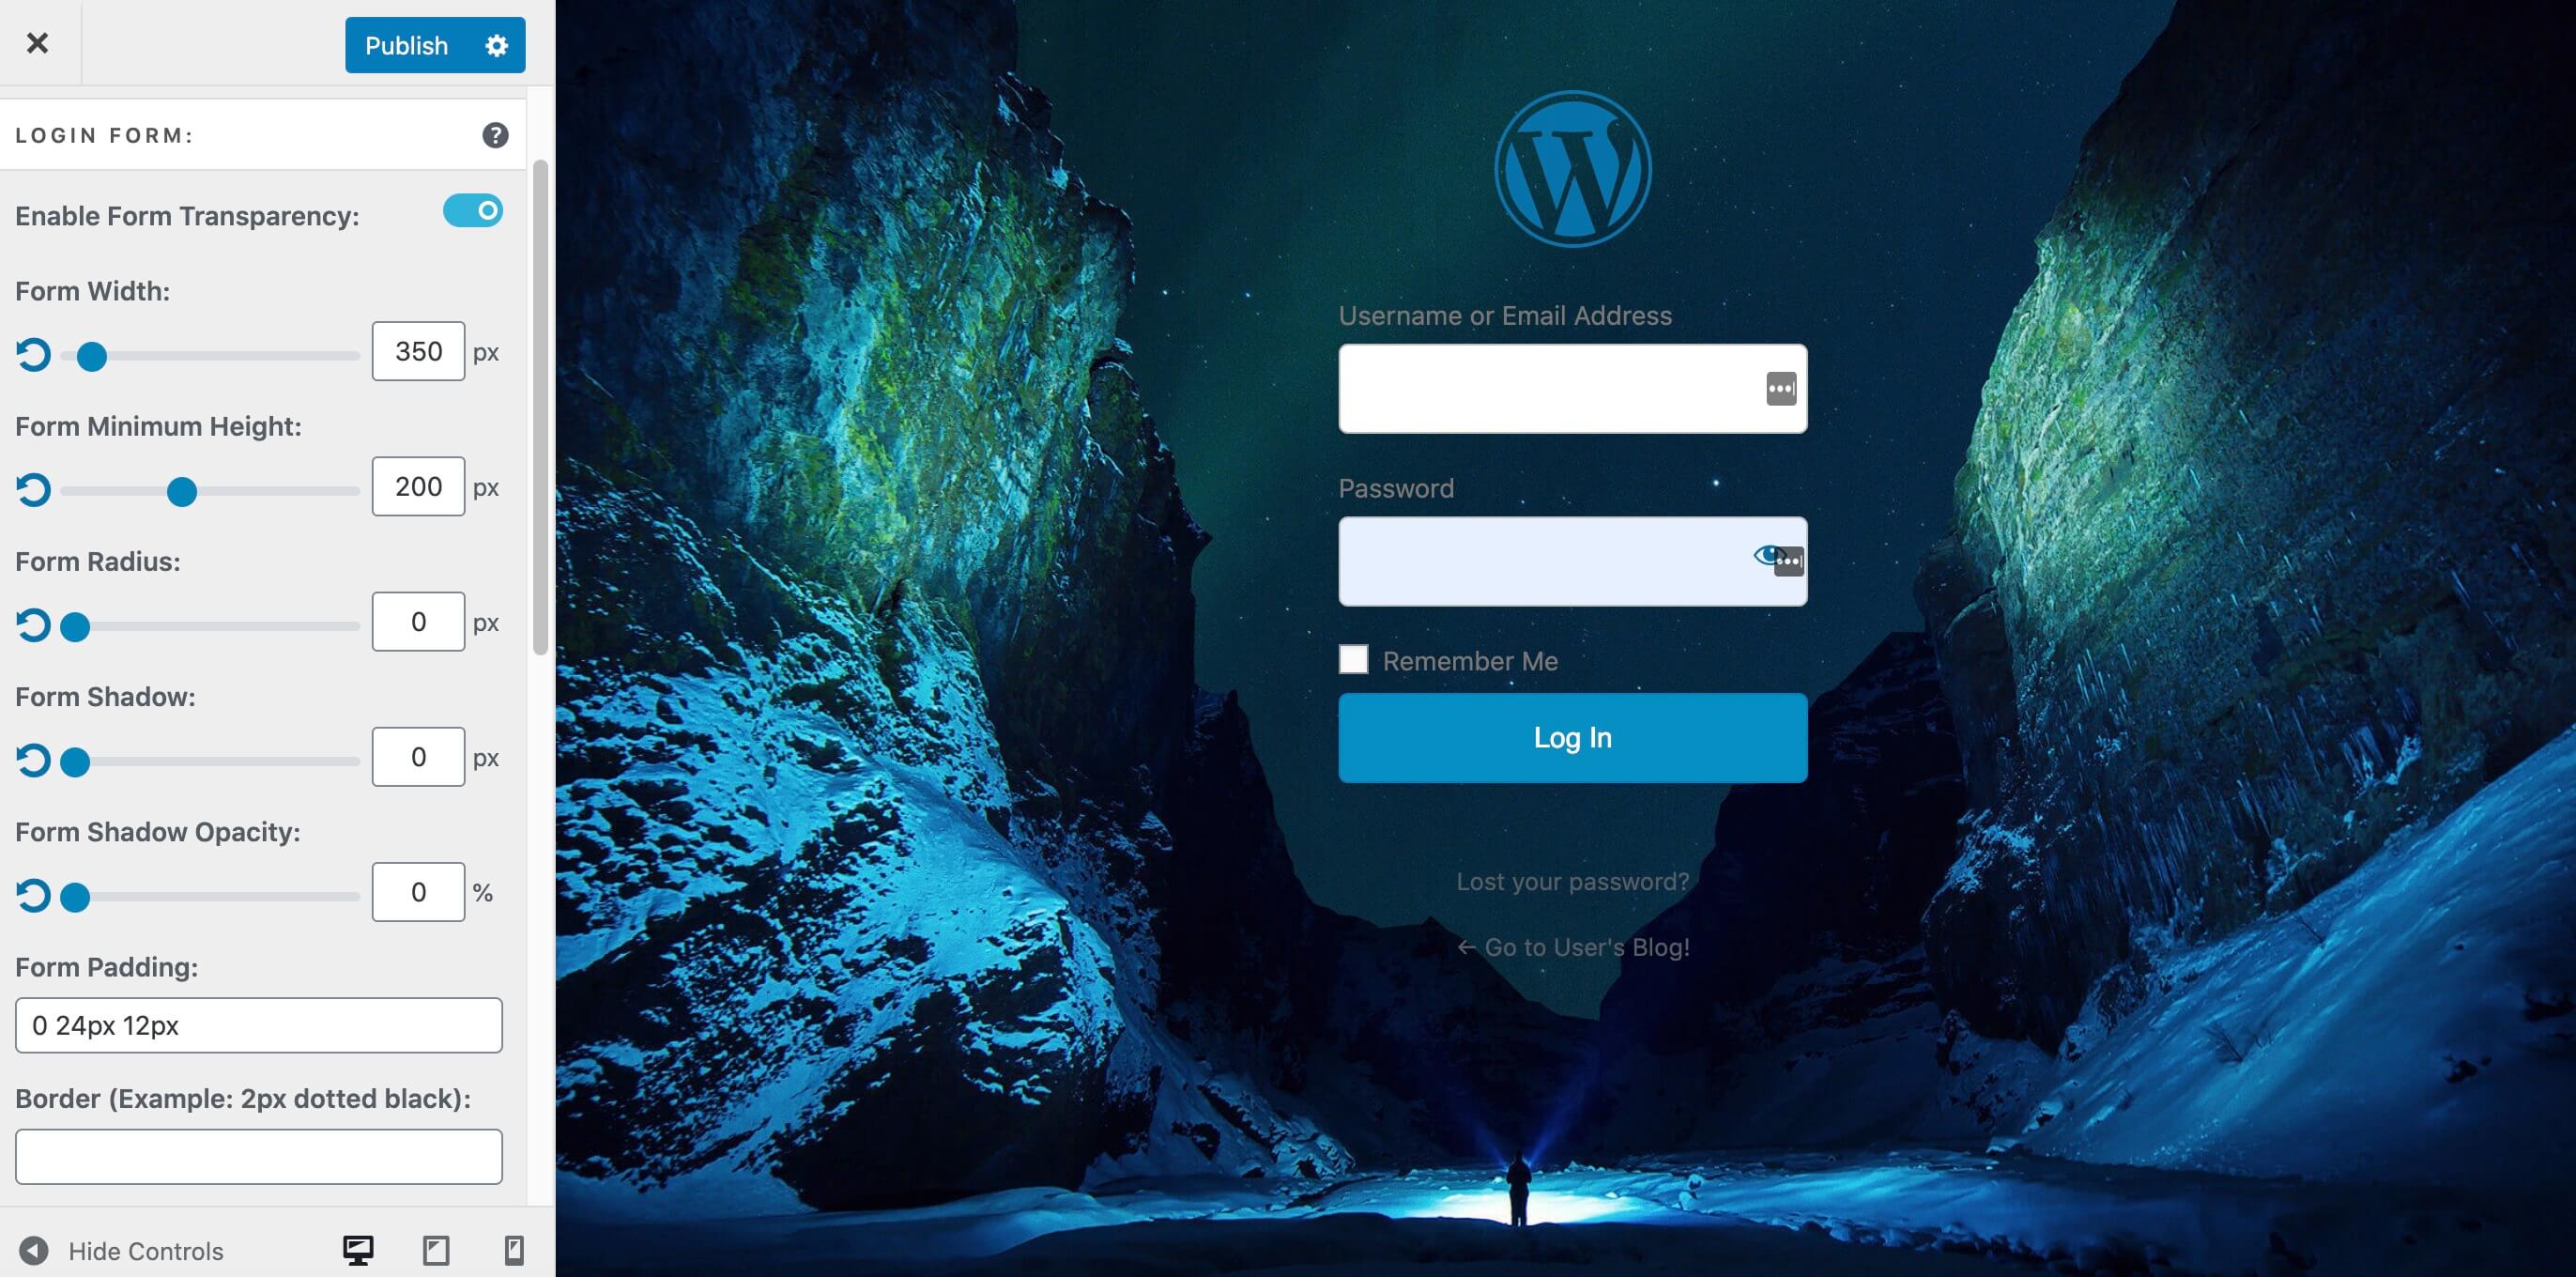 A custom WordPress login page featuring a transparent form.